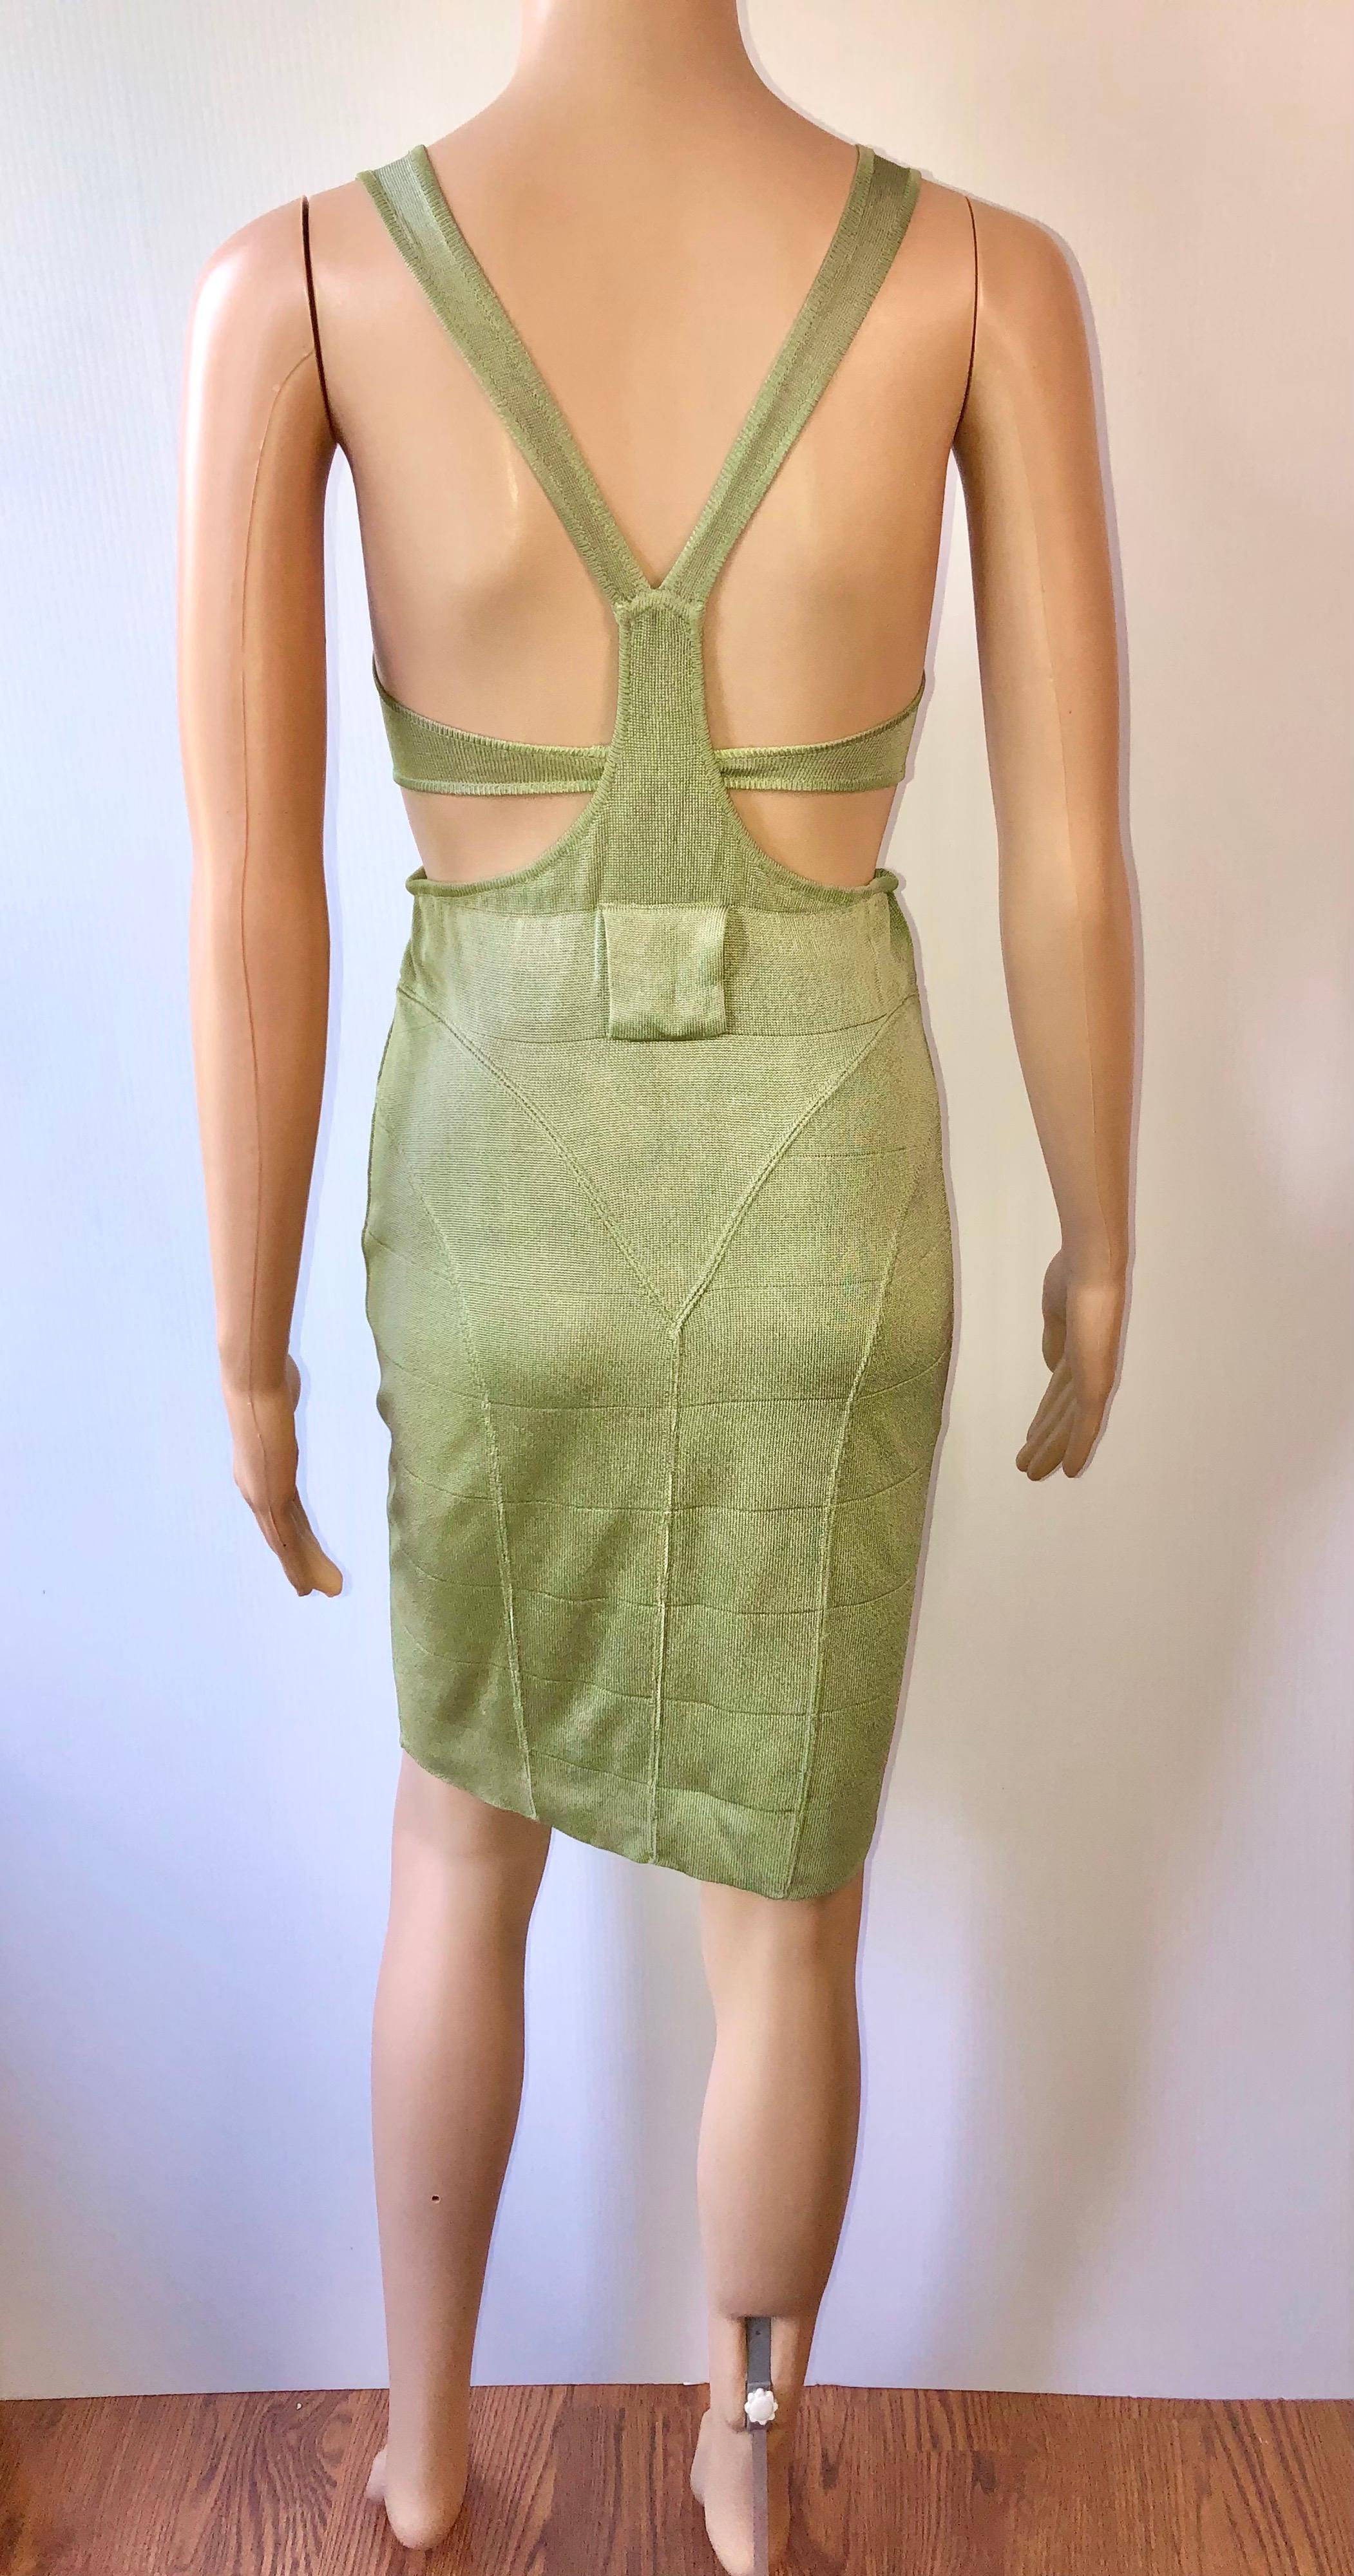 Azzedine Alaia 1985 Vintage Plunged Cutout Bodycon Green Dress Size M